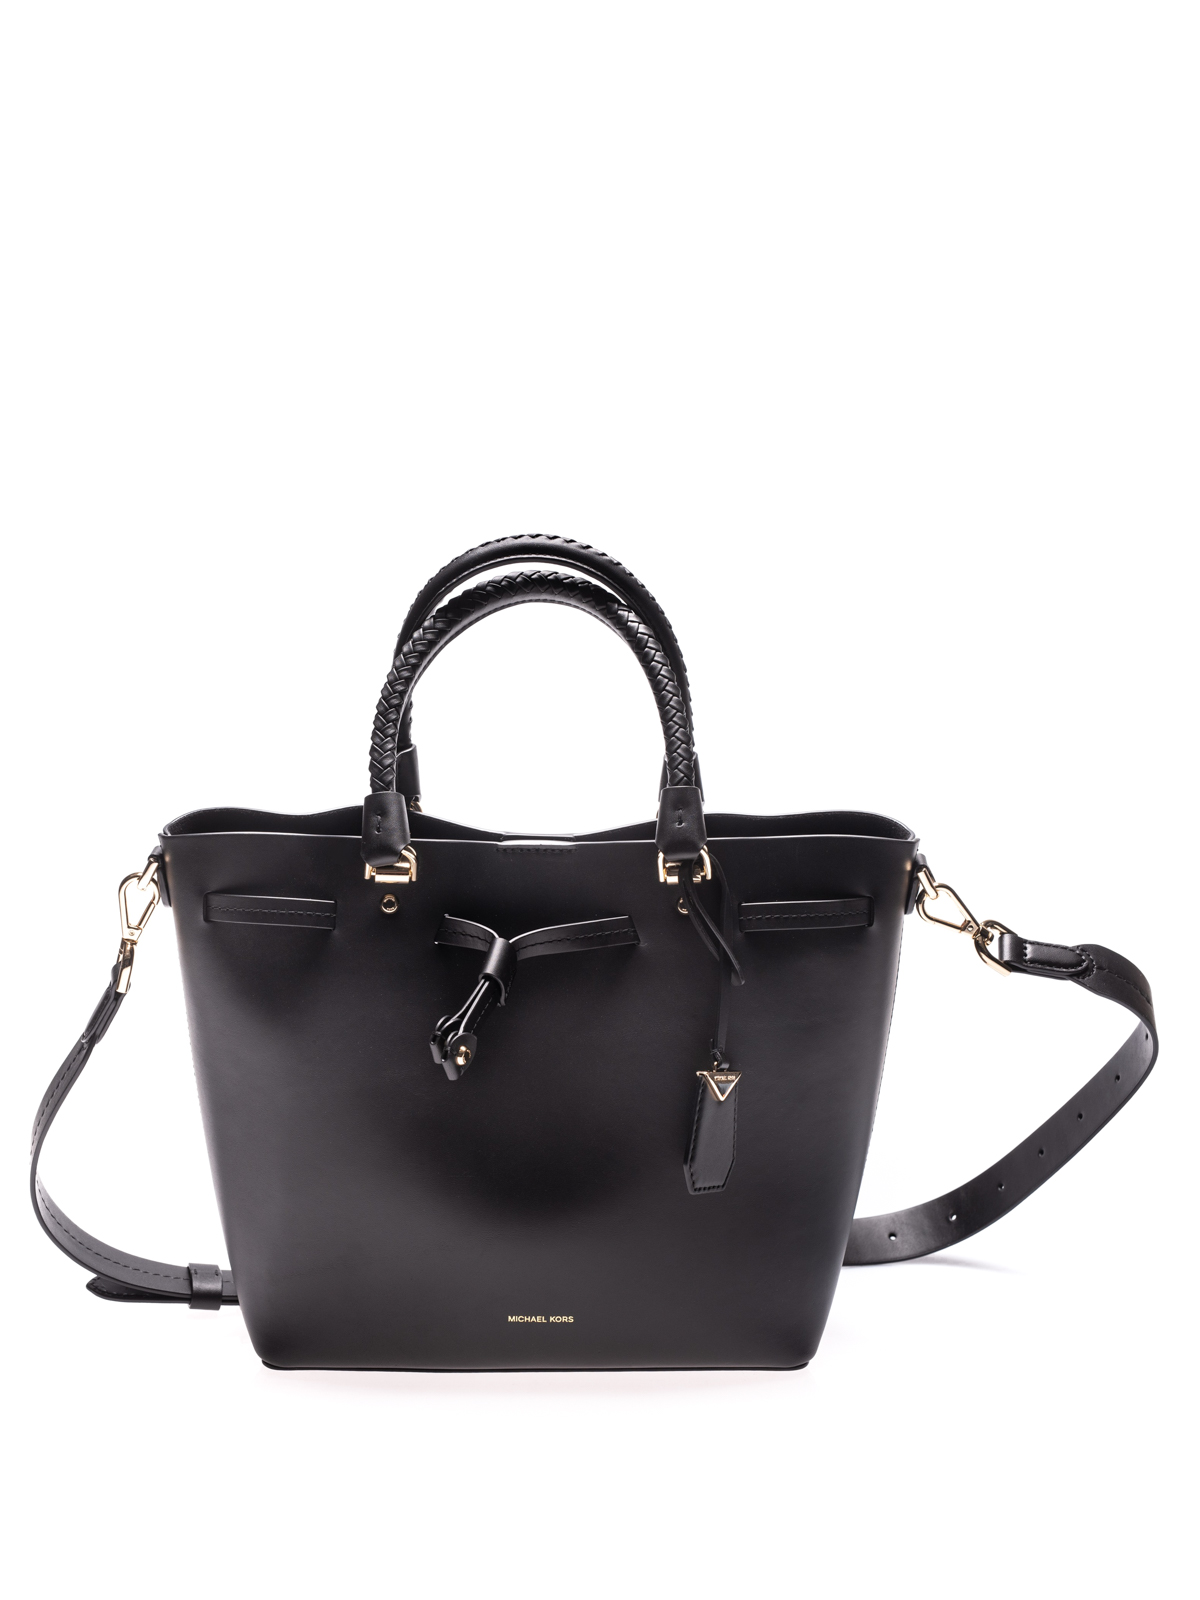 Michael Kors Medium Black Leather Bucket/Tote Bag, Leather + Woven